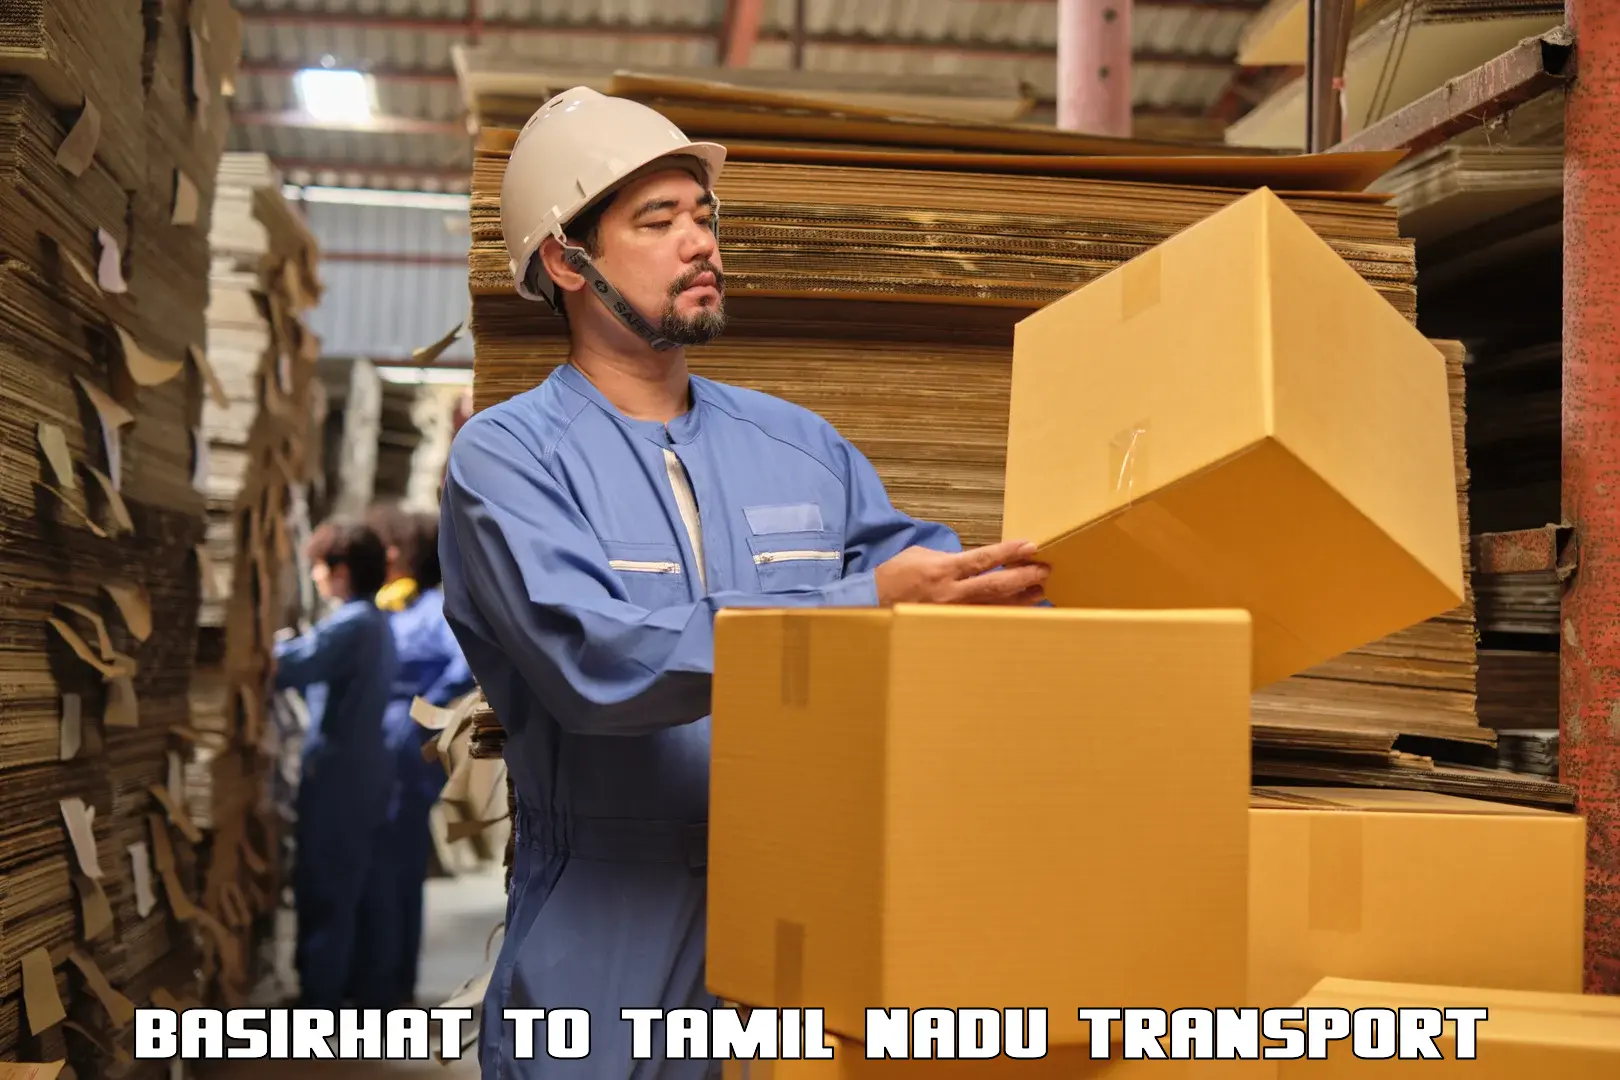 Daily transport service Basirhat to Tamil Nadu